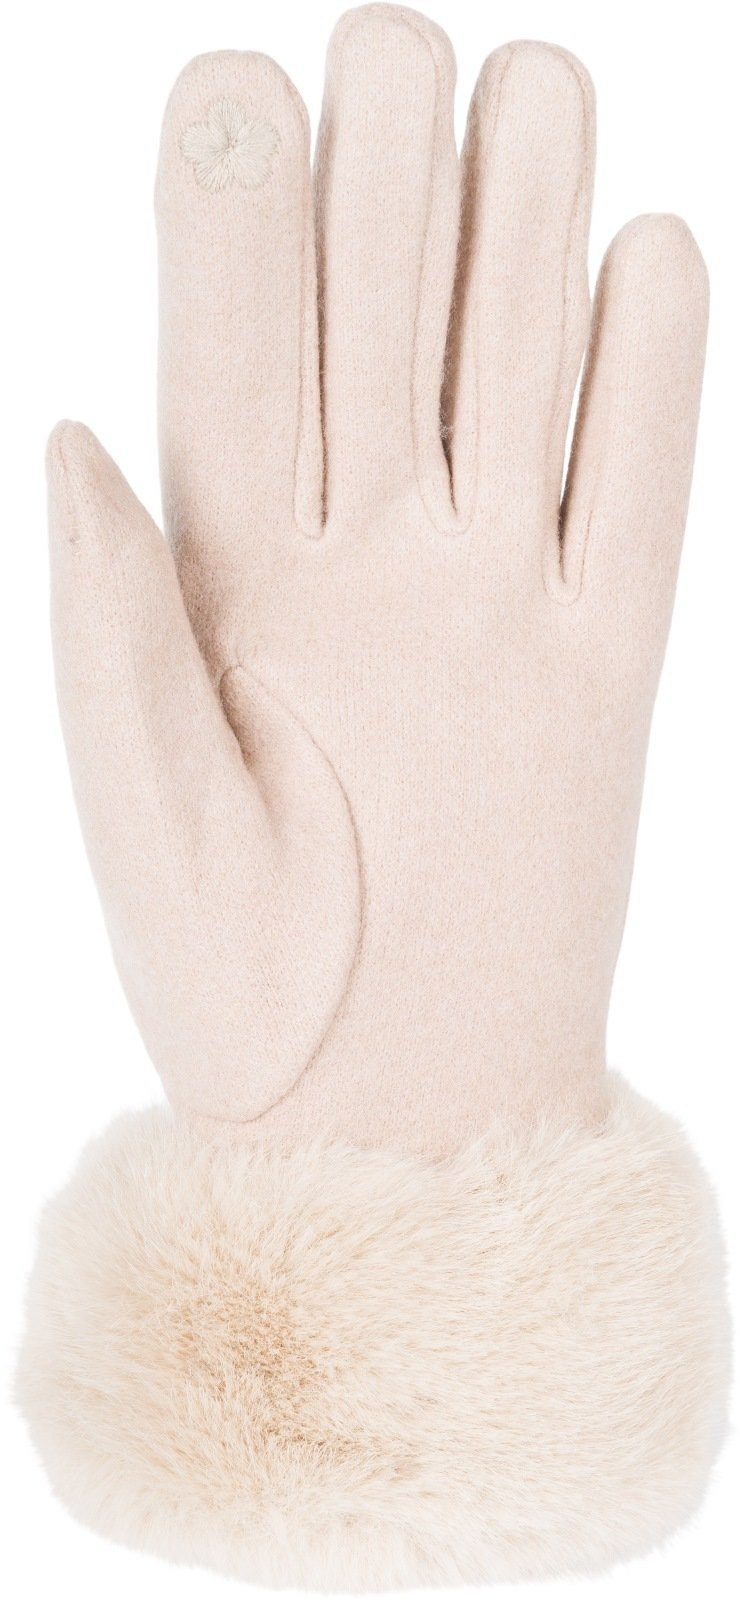 styleBREAKER Fleecehandschuhe Kunstfell Touchscreen mit Beige Unifarbene Handschuhe